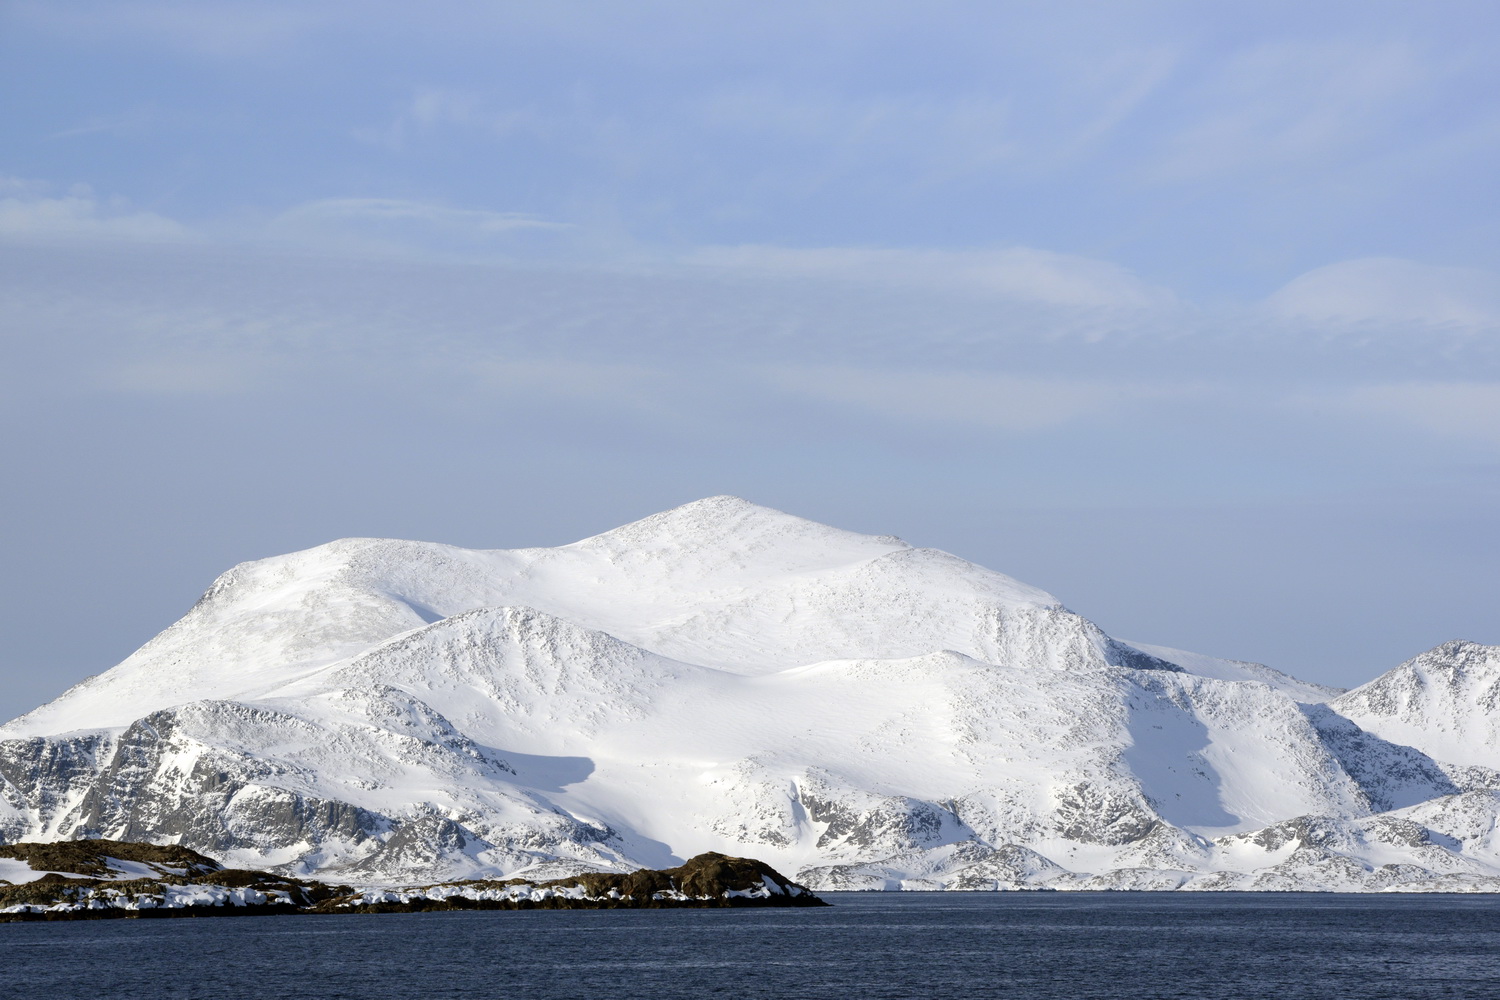 Dolph Kessler - Sarfaq Ittuk, Greenland  